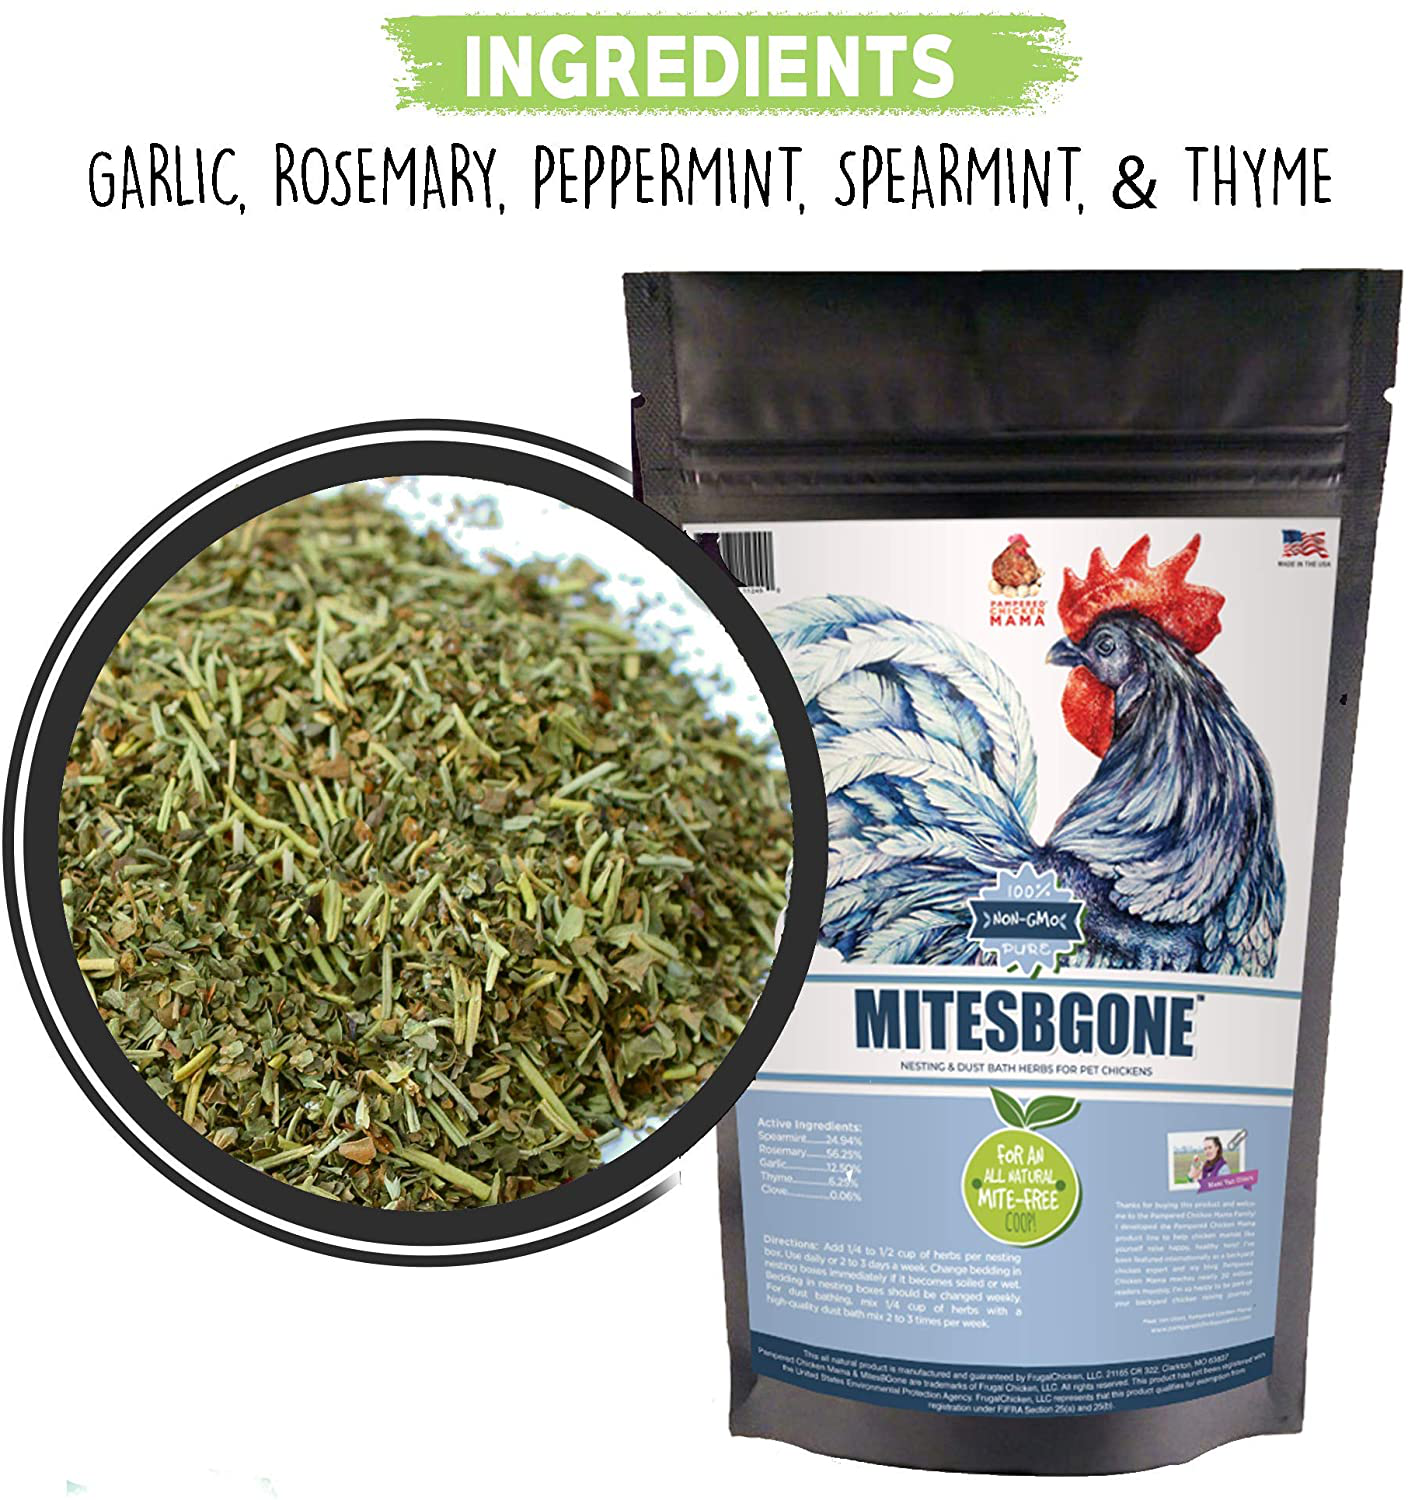 Mitesbgone Backyard Chicken Nesting Herbs - Get Rid of Chicken Mites and Lice Naturally